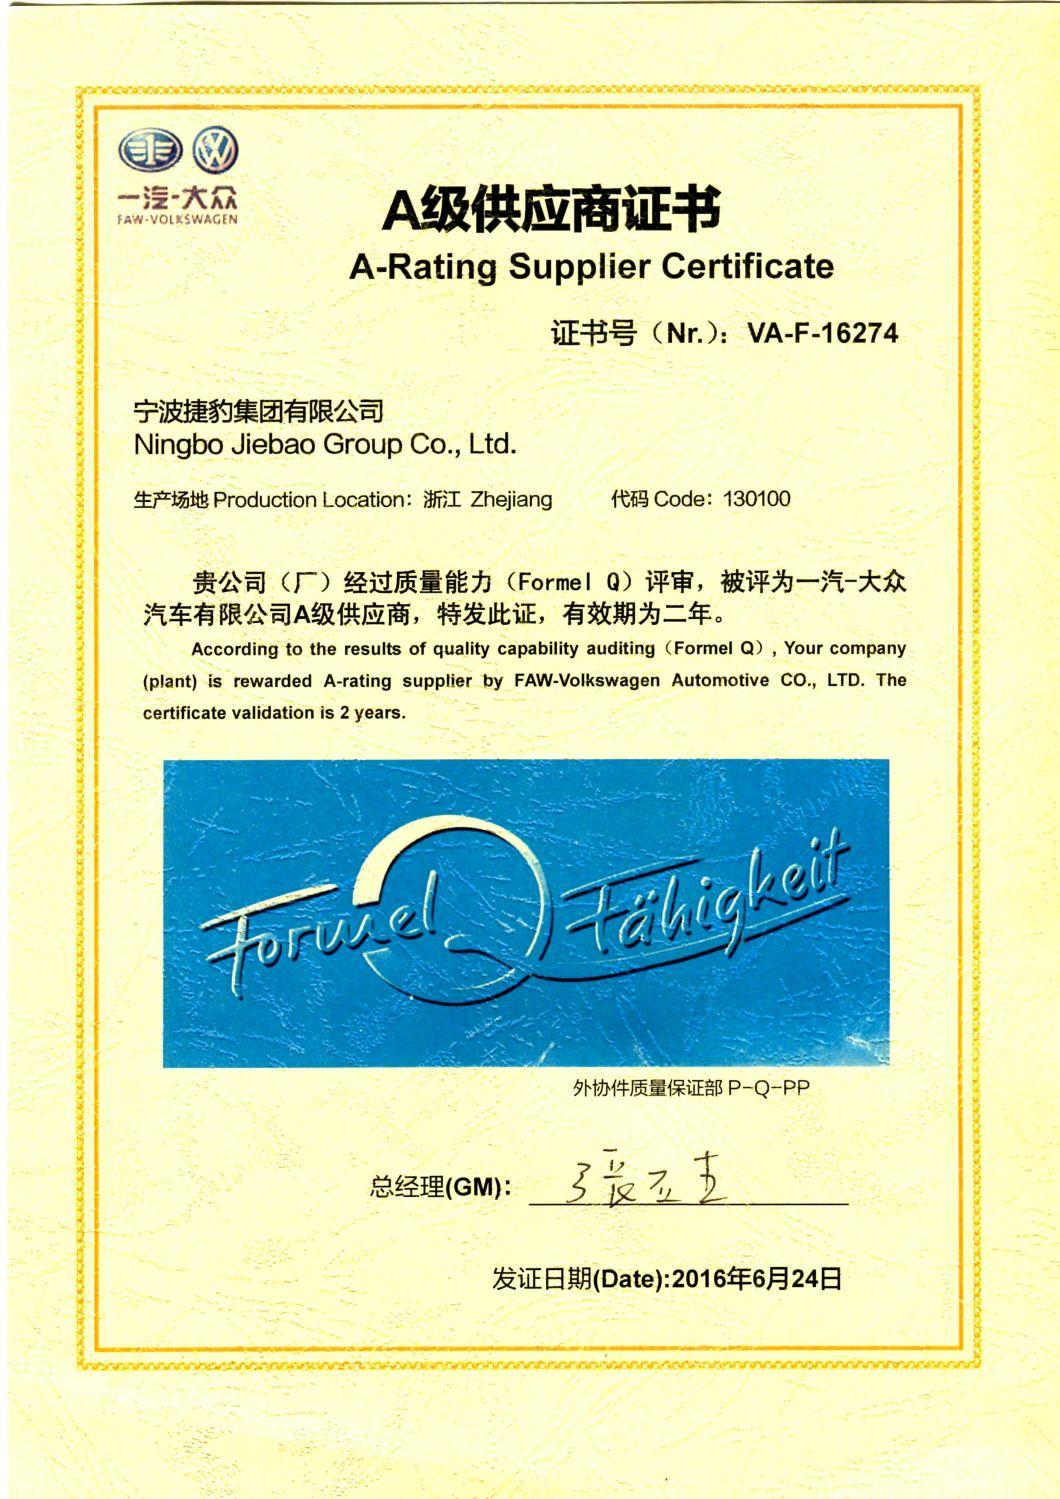 GM Belt Maker - Jiebao High Quality Neoprene Transmission Parts Fan Automotive Textile Garment Packaging Agricultural Machinery Drive Timing Belt